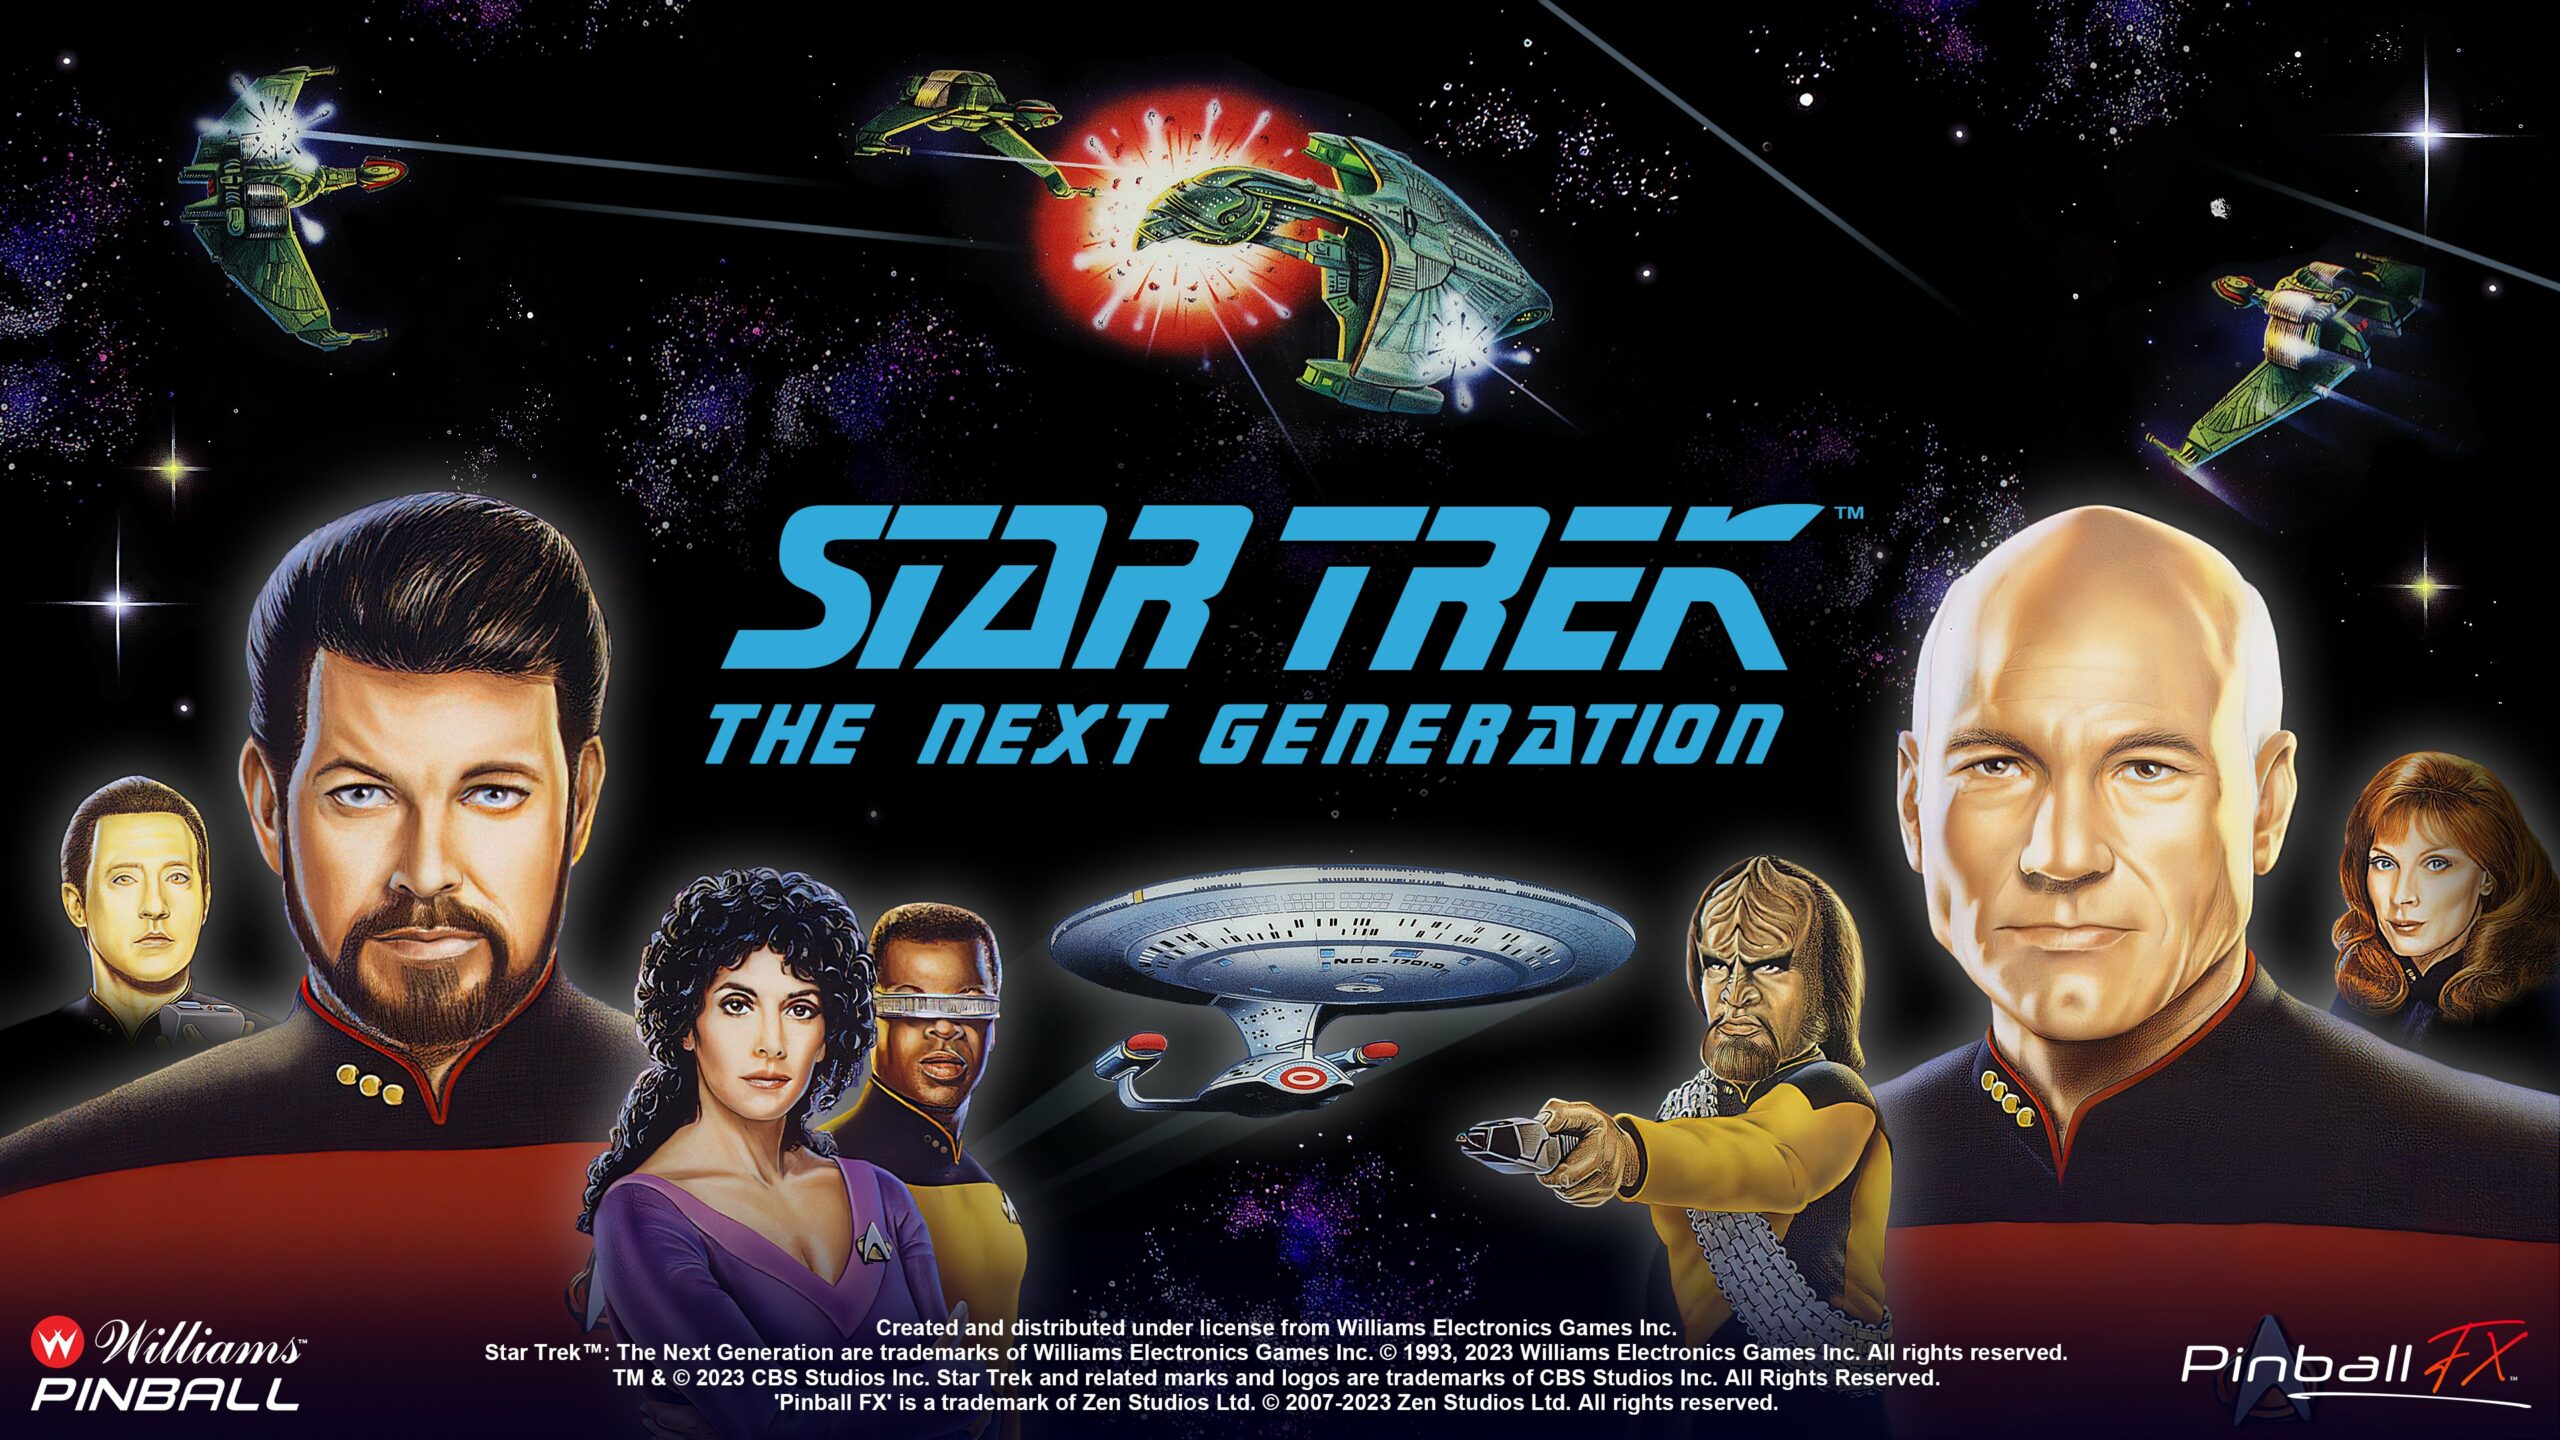 Pinball FX now has has Star Trek: The Next Generation DLC